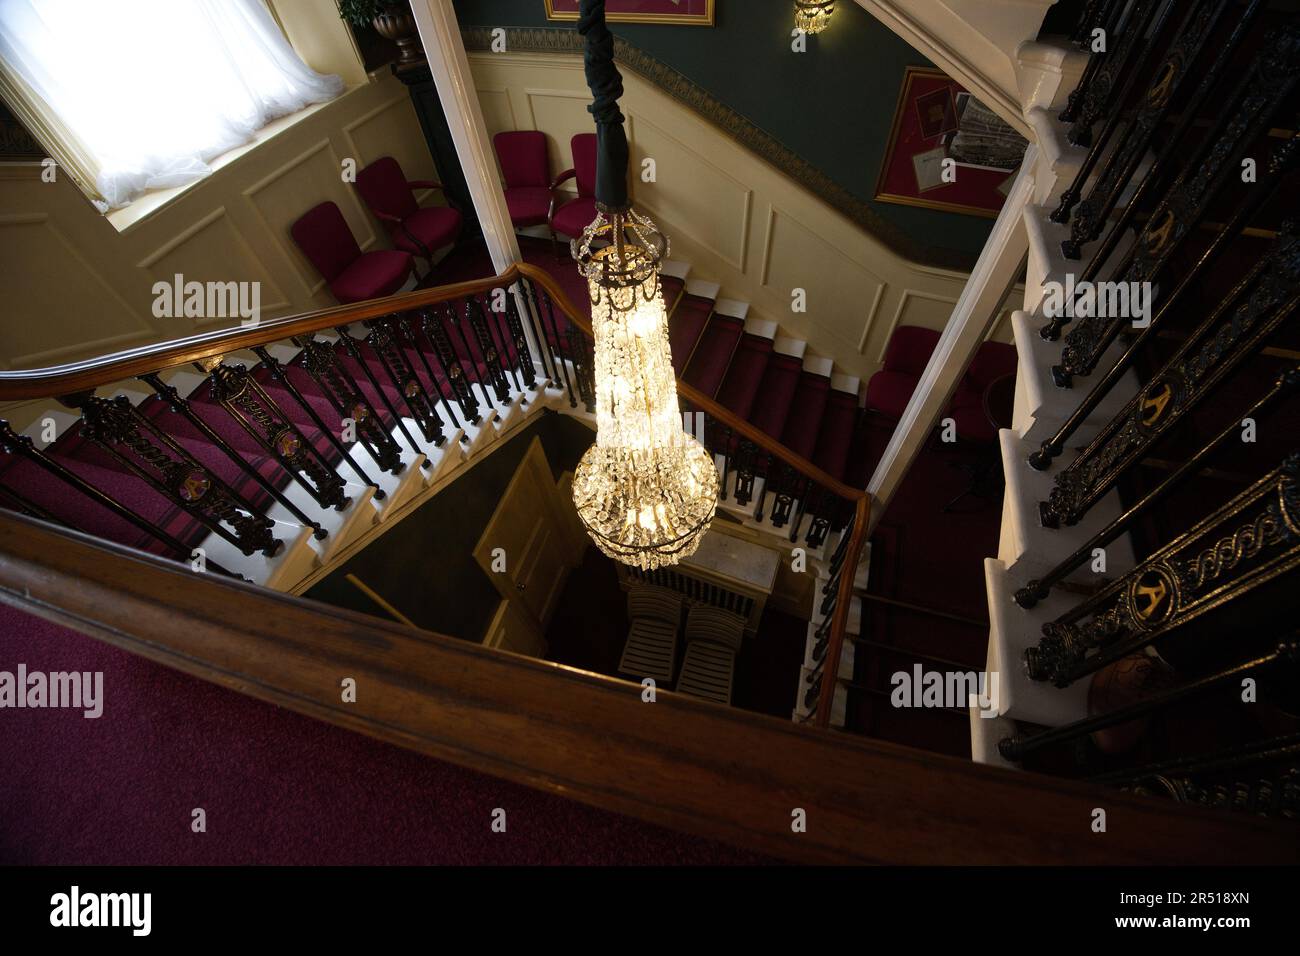 Chandelier inside the Royal Albert Hall in London Stock Photo